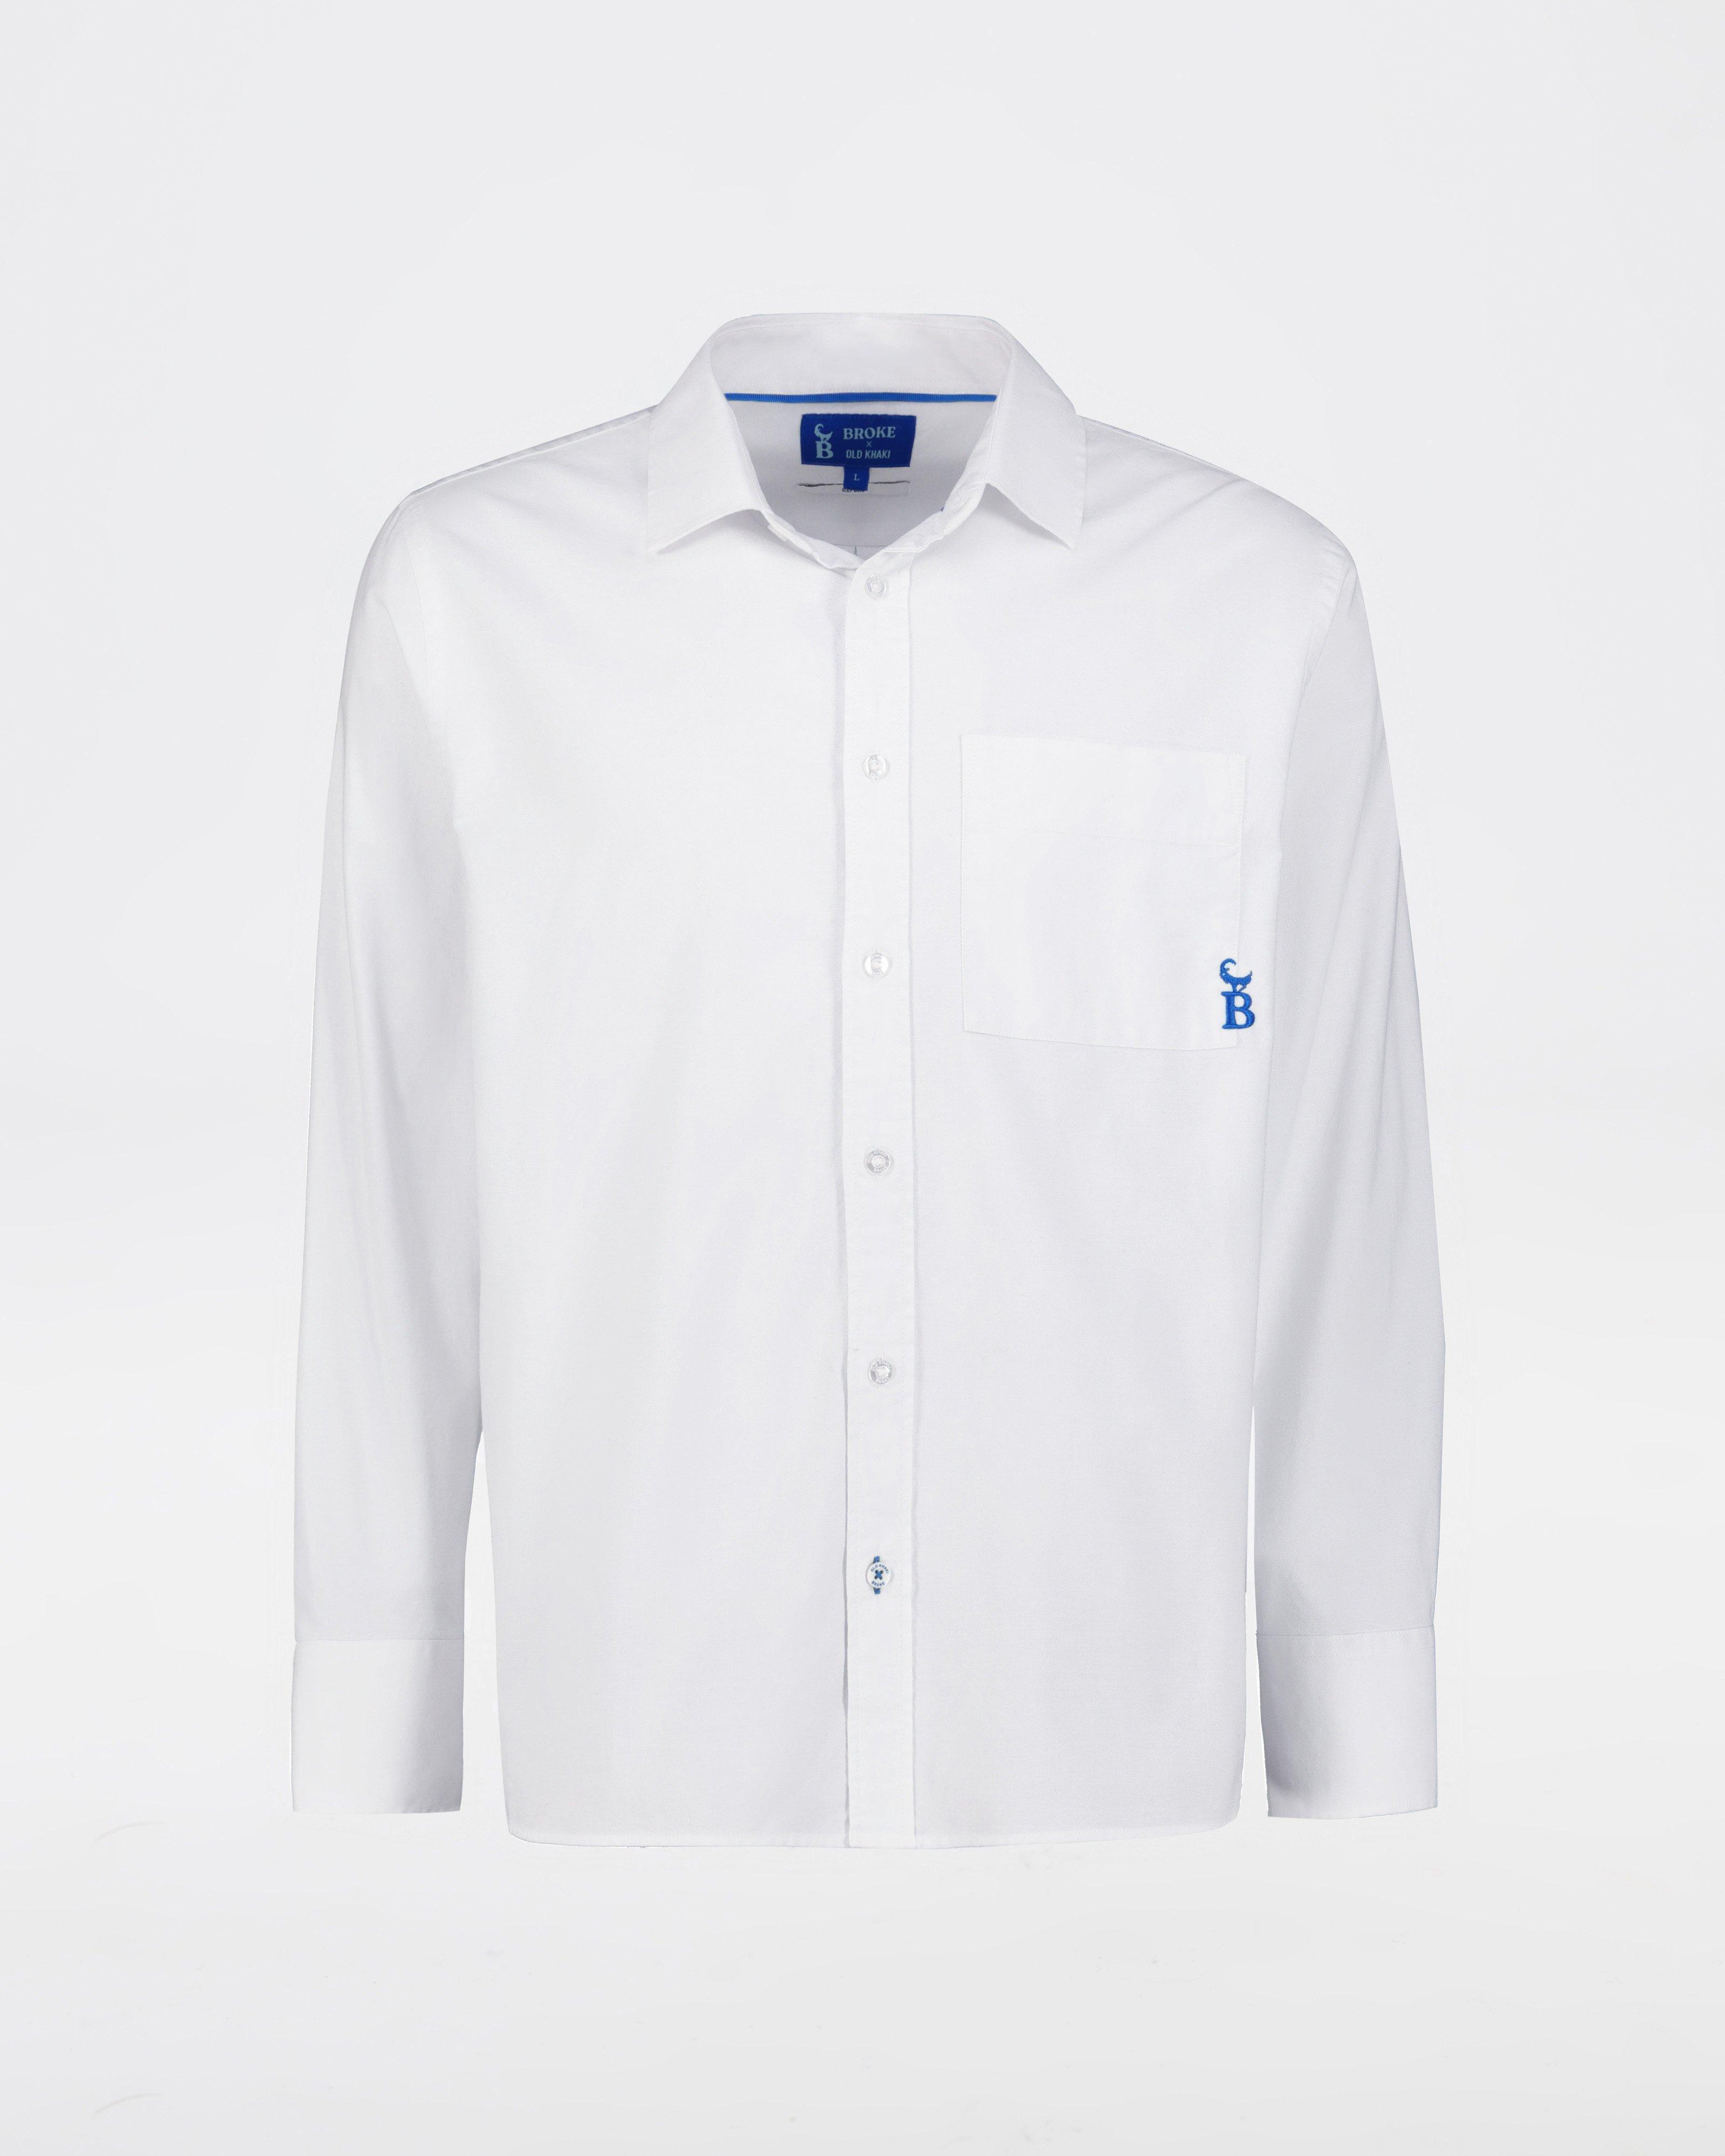 BROKE x Old Khaki Unisex White Shirt -  White